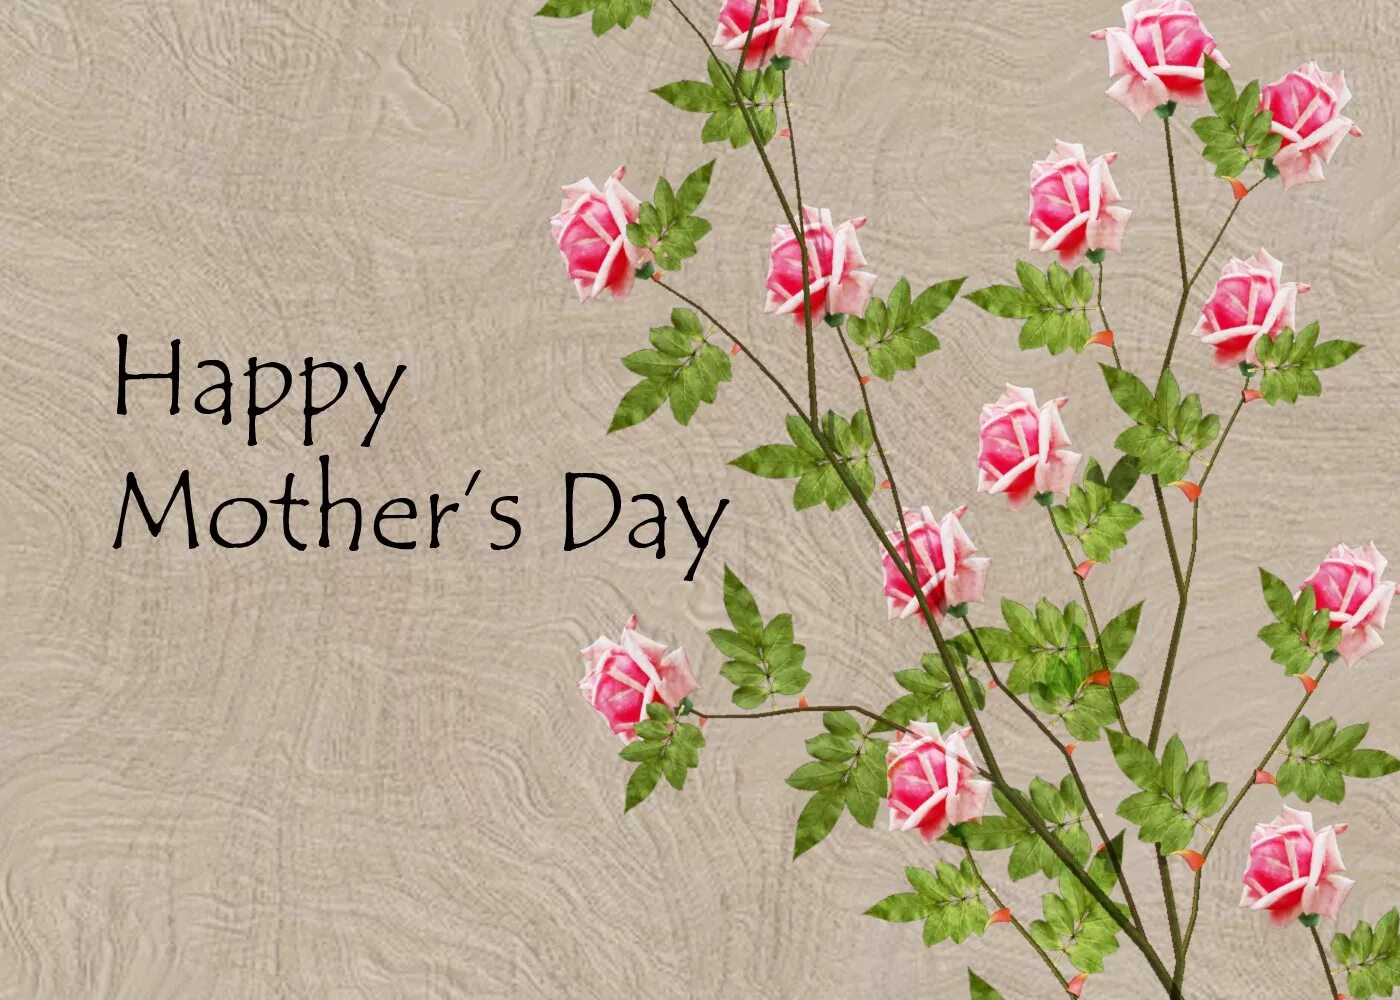 Happy mother s Day. Mother's Day открытка. Мазерс Дэй. Поздравление с днем матери на английском. Мама на работе на английском